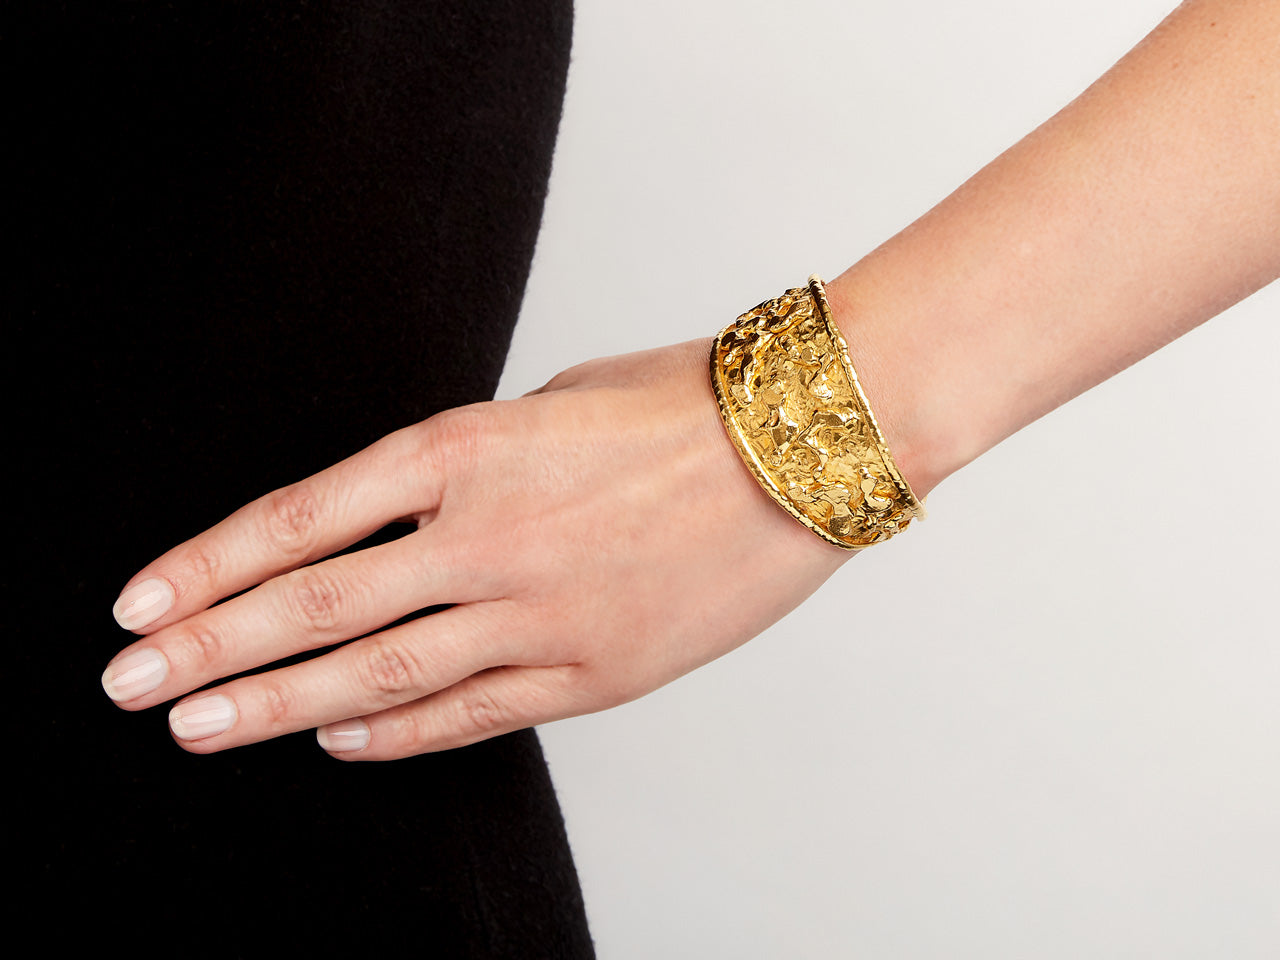 Jean Mahie 'Charming Monsters' Cuff Bracelet in 22K Gold